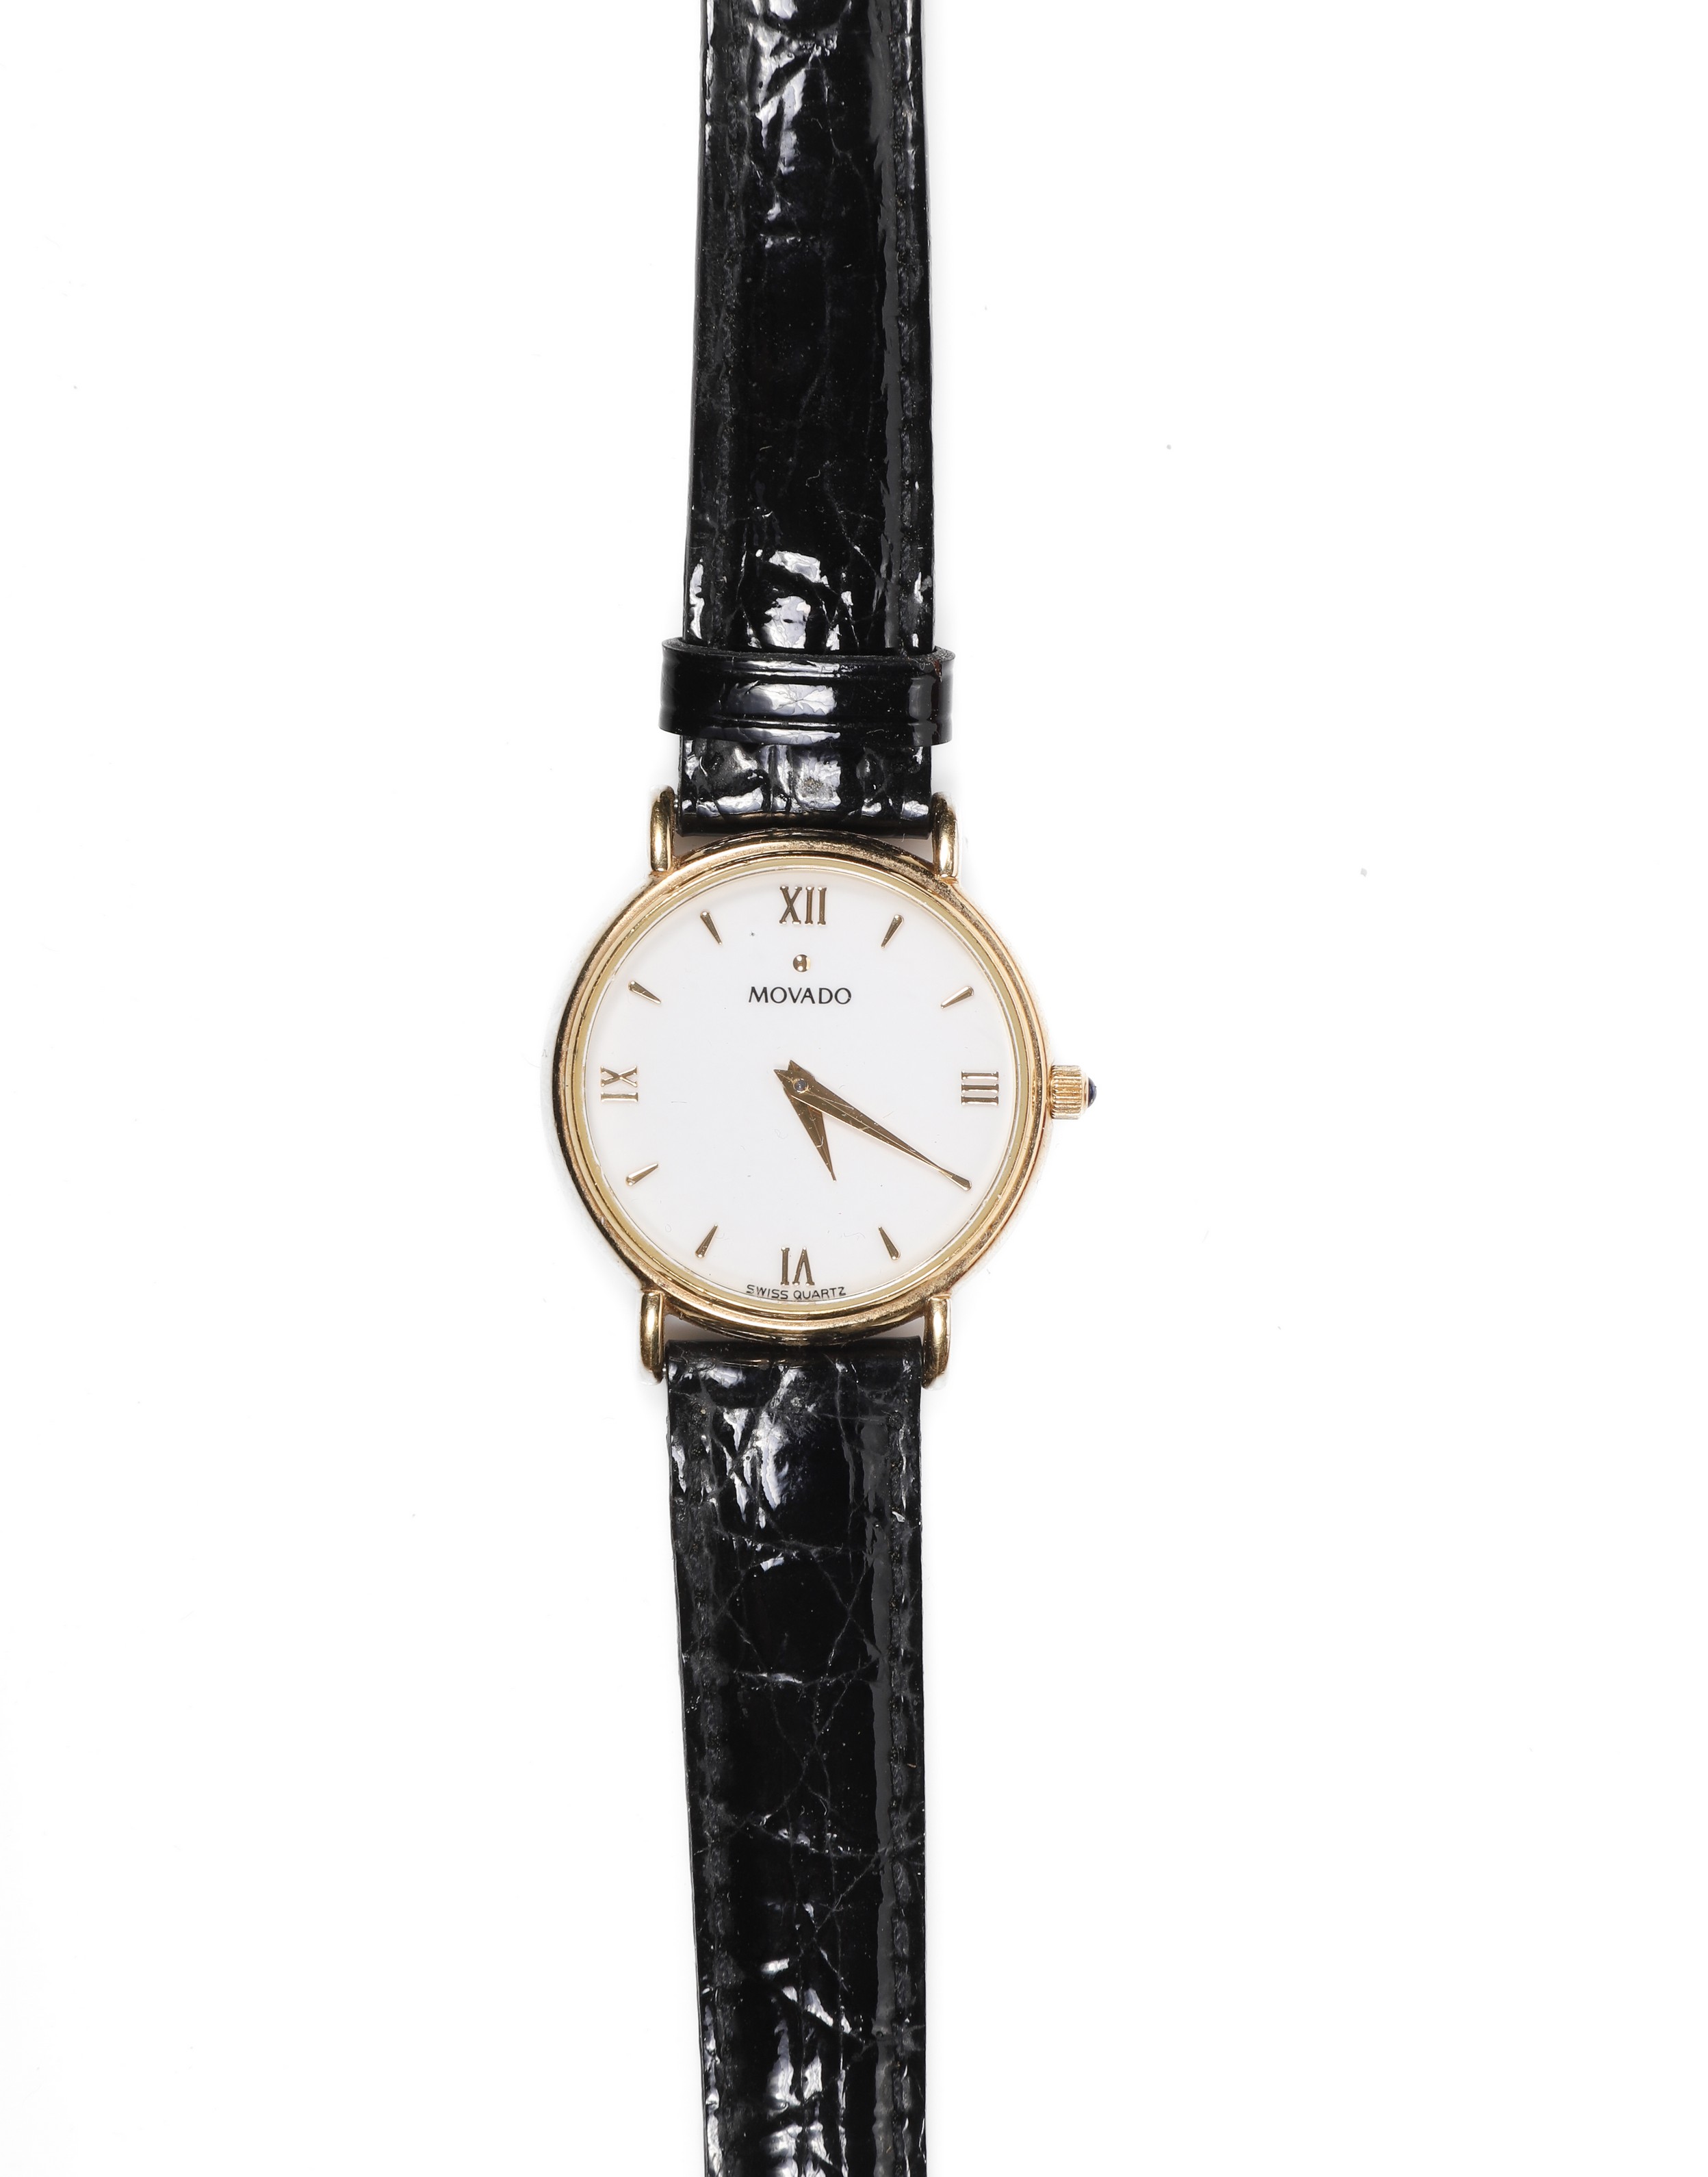 Movado quartz wristwatch, water resistant,